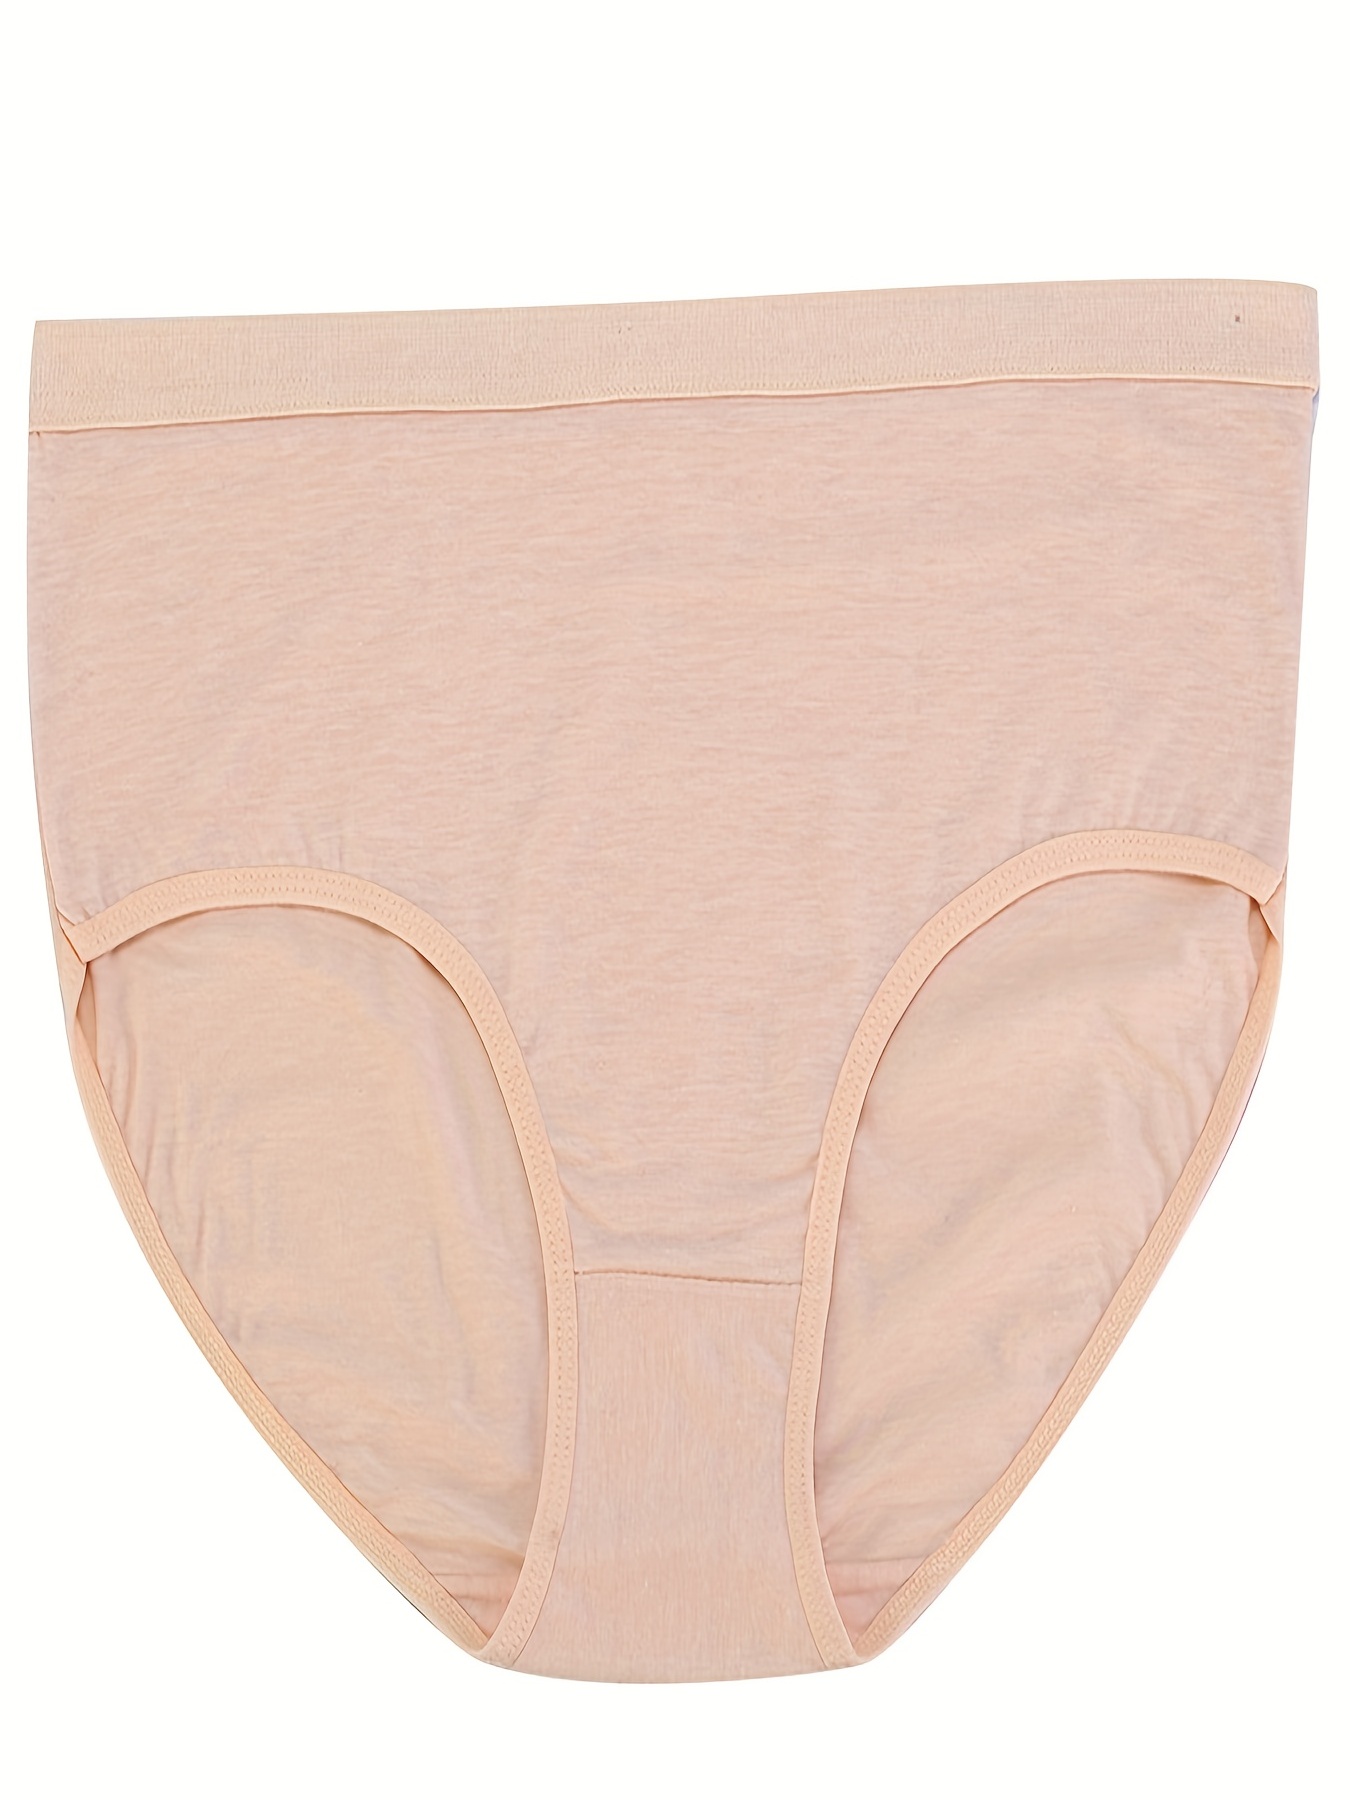 Women's Underwear Cotton High Waisted Full Briefs Ladies Stretch Panties 4  Pack